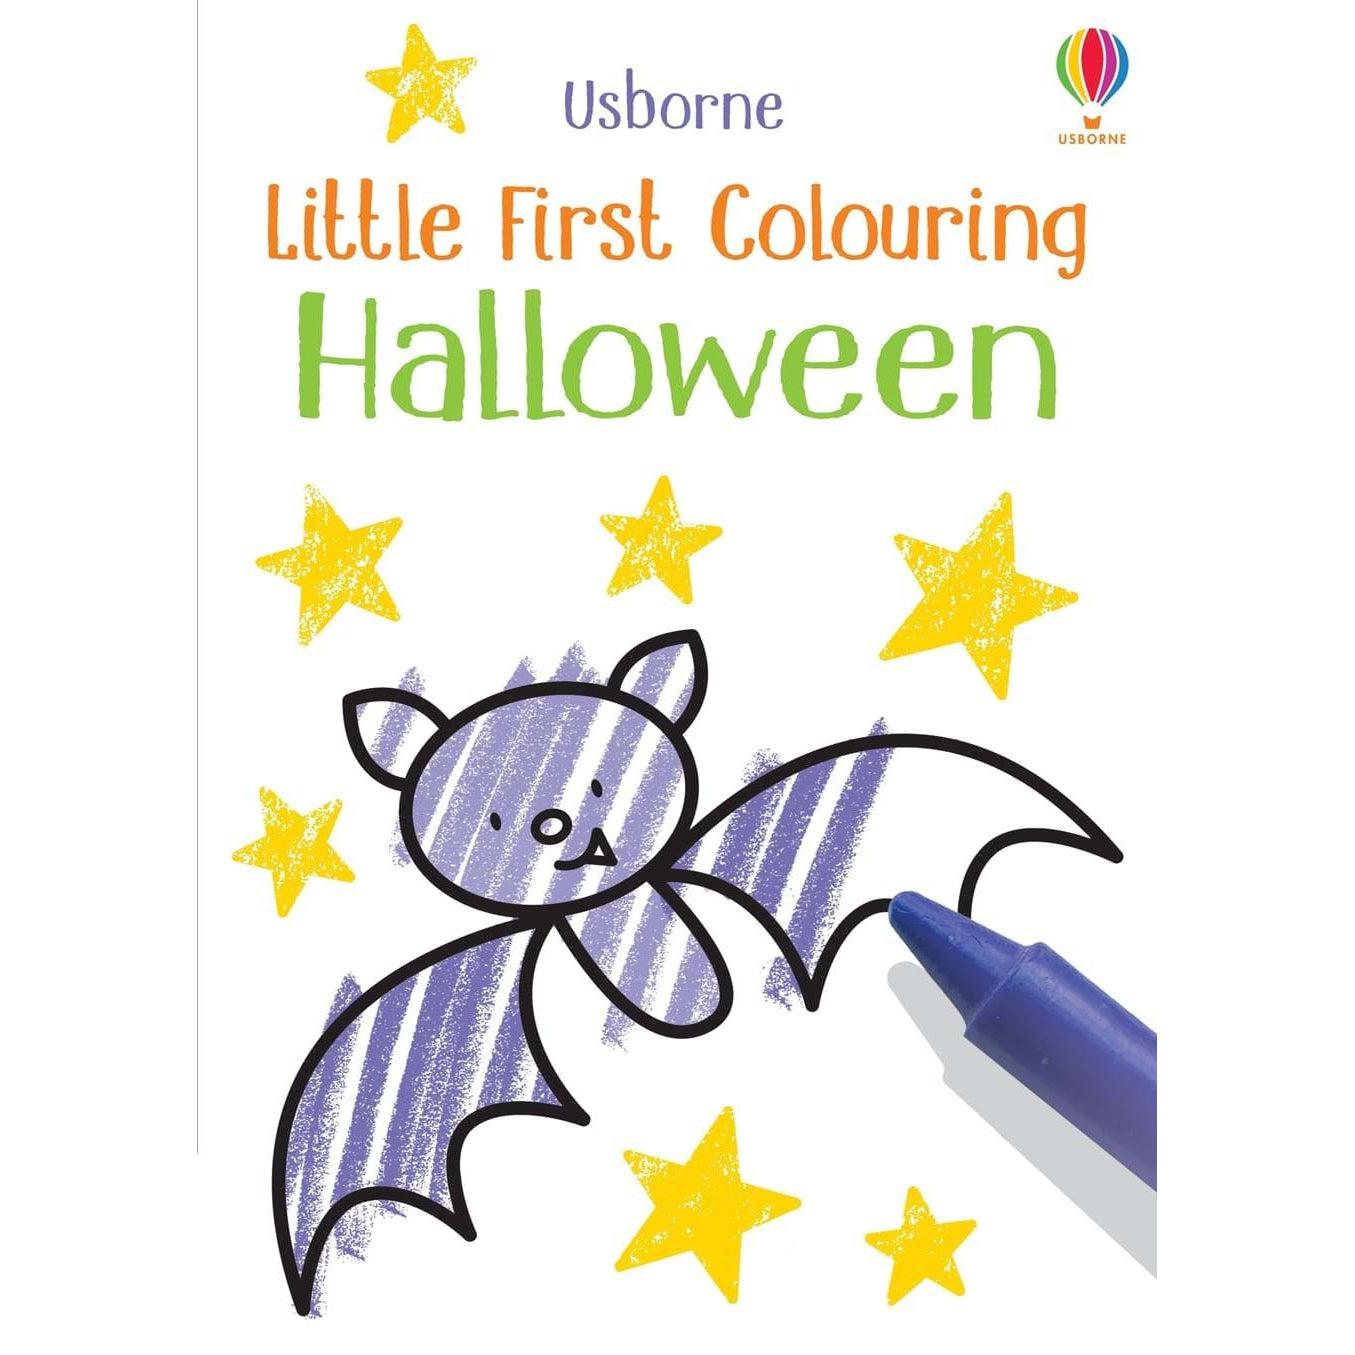 Little First Colouring Halloween